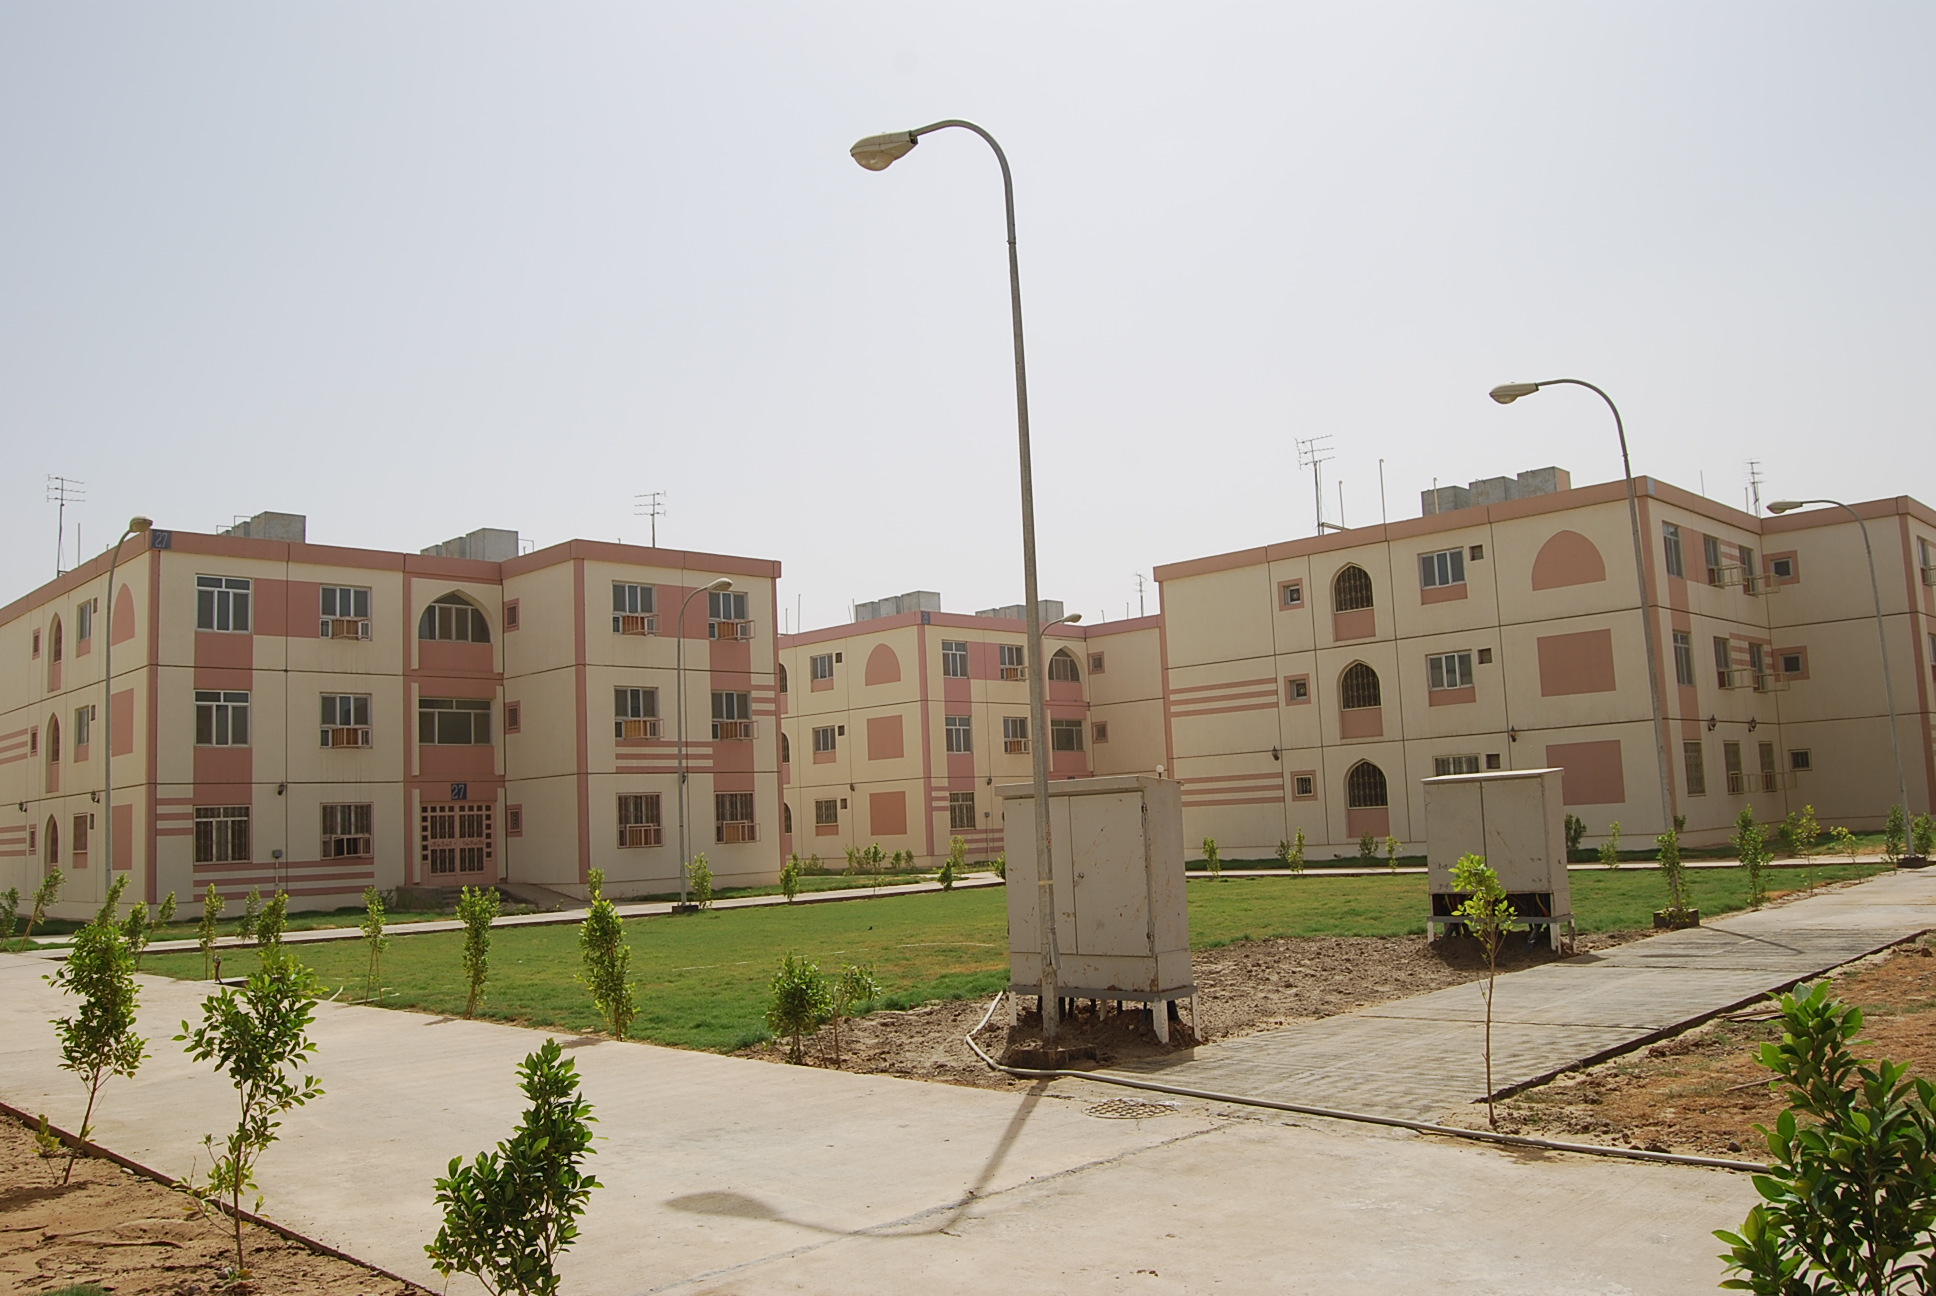 Residential complex in Baghdad / Sabaa Abkar